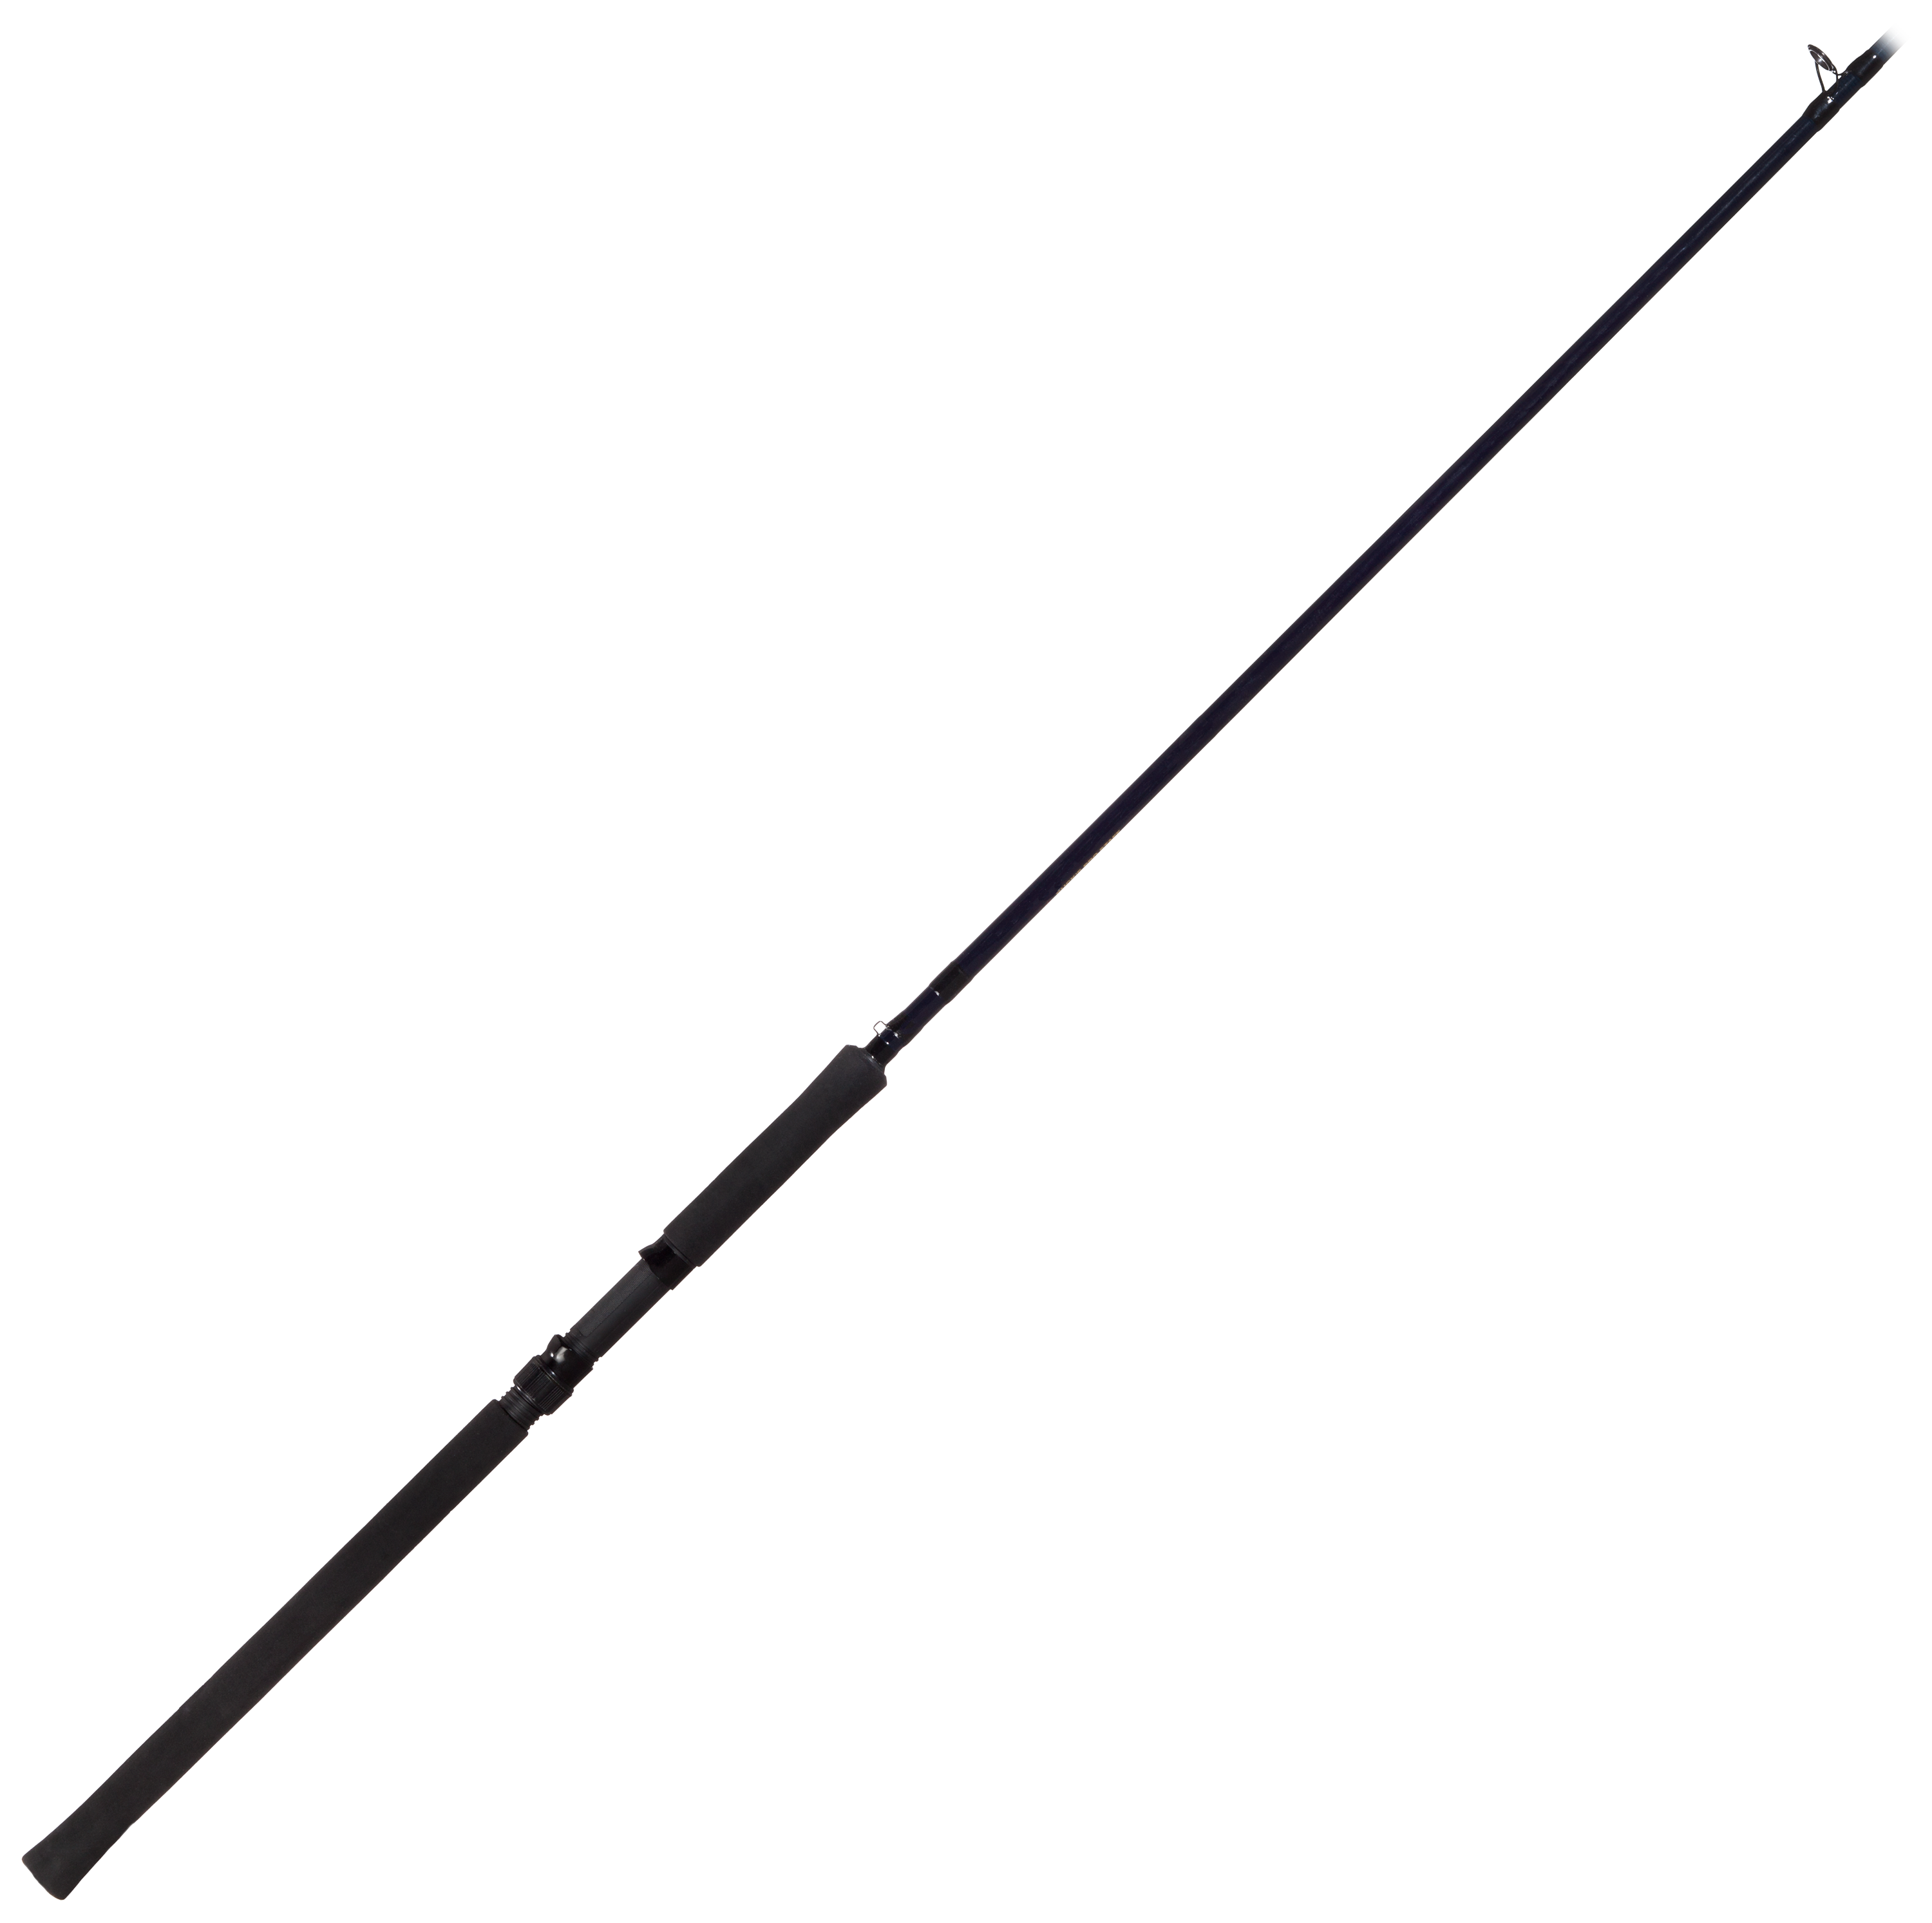 B&M Buck's Graphite Jig Fishing Pole, 12ft, 2 Pieces, Black, 